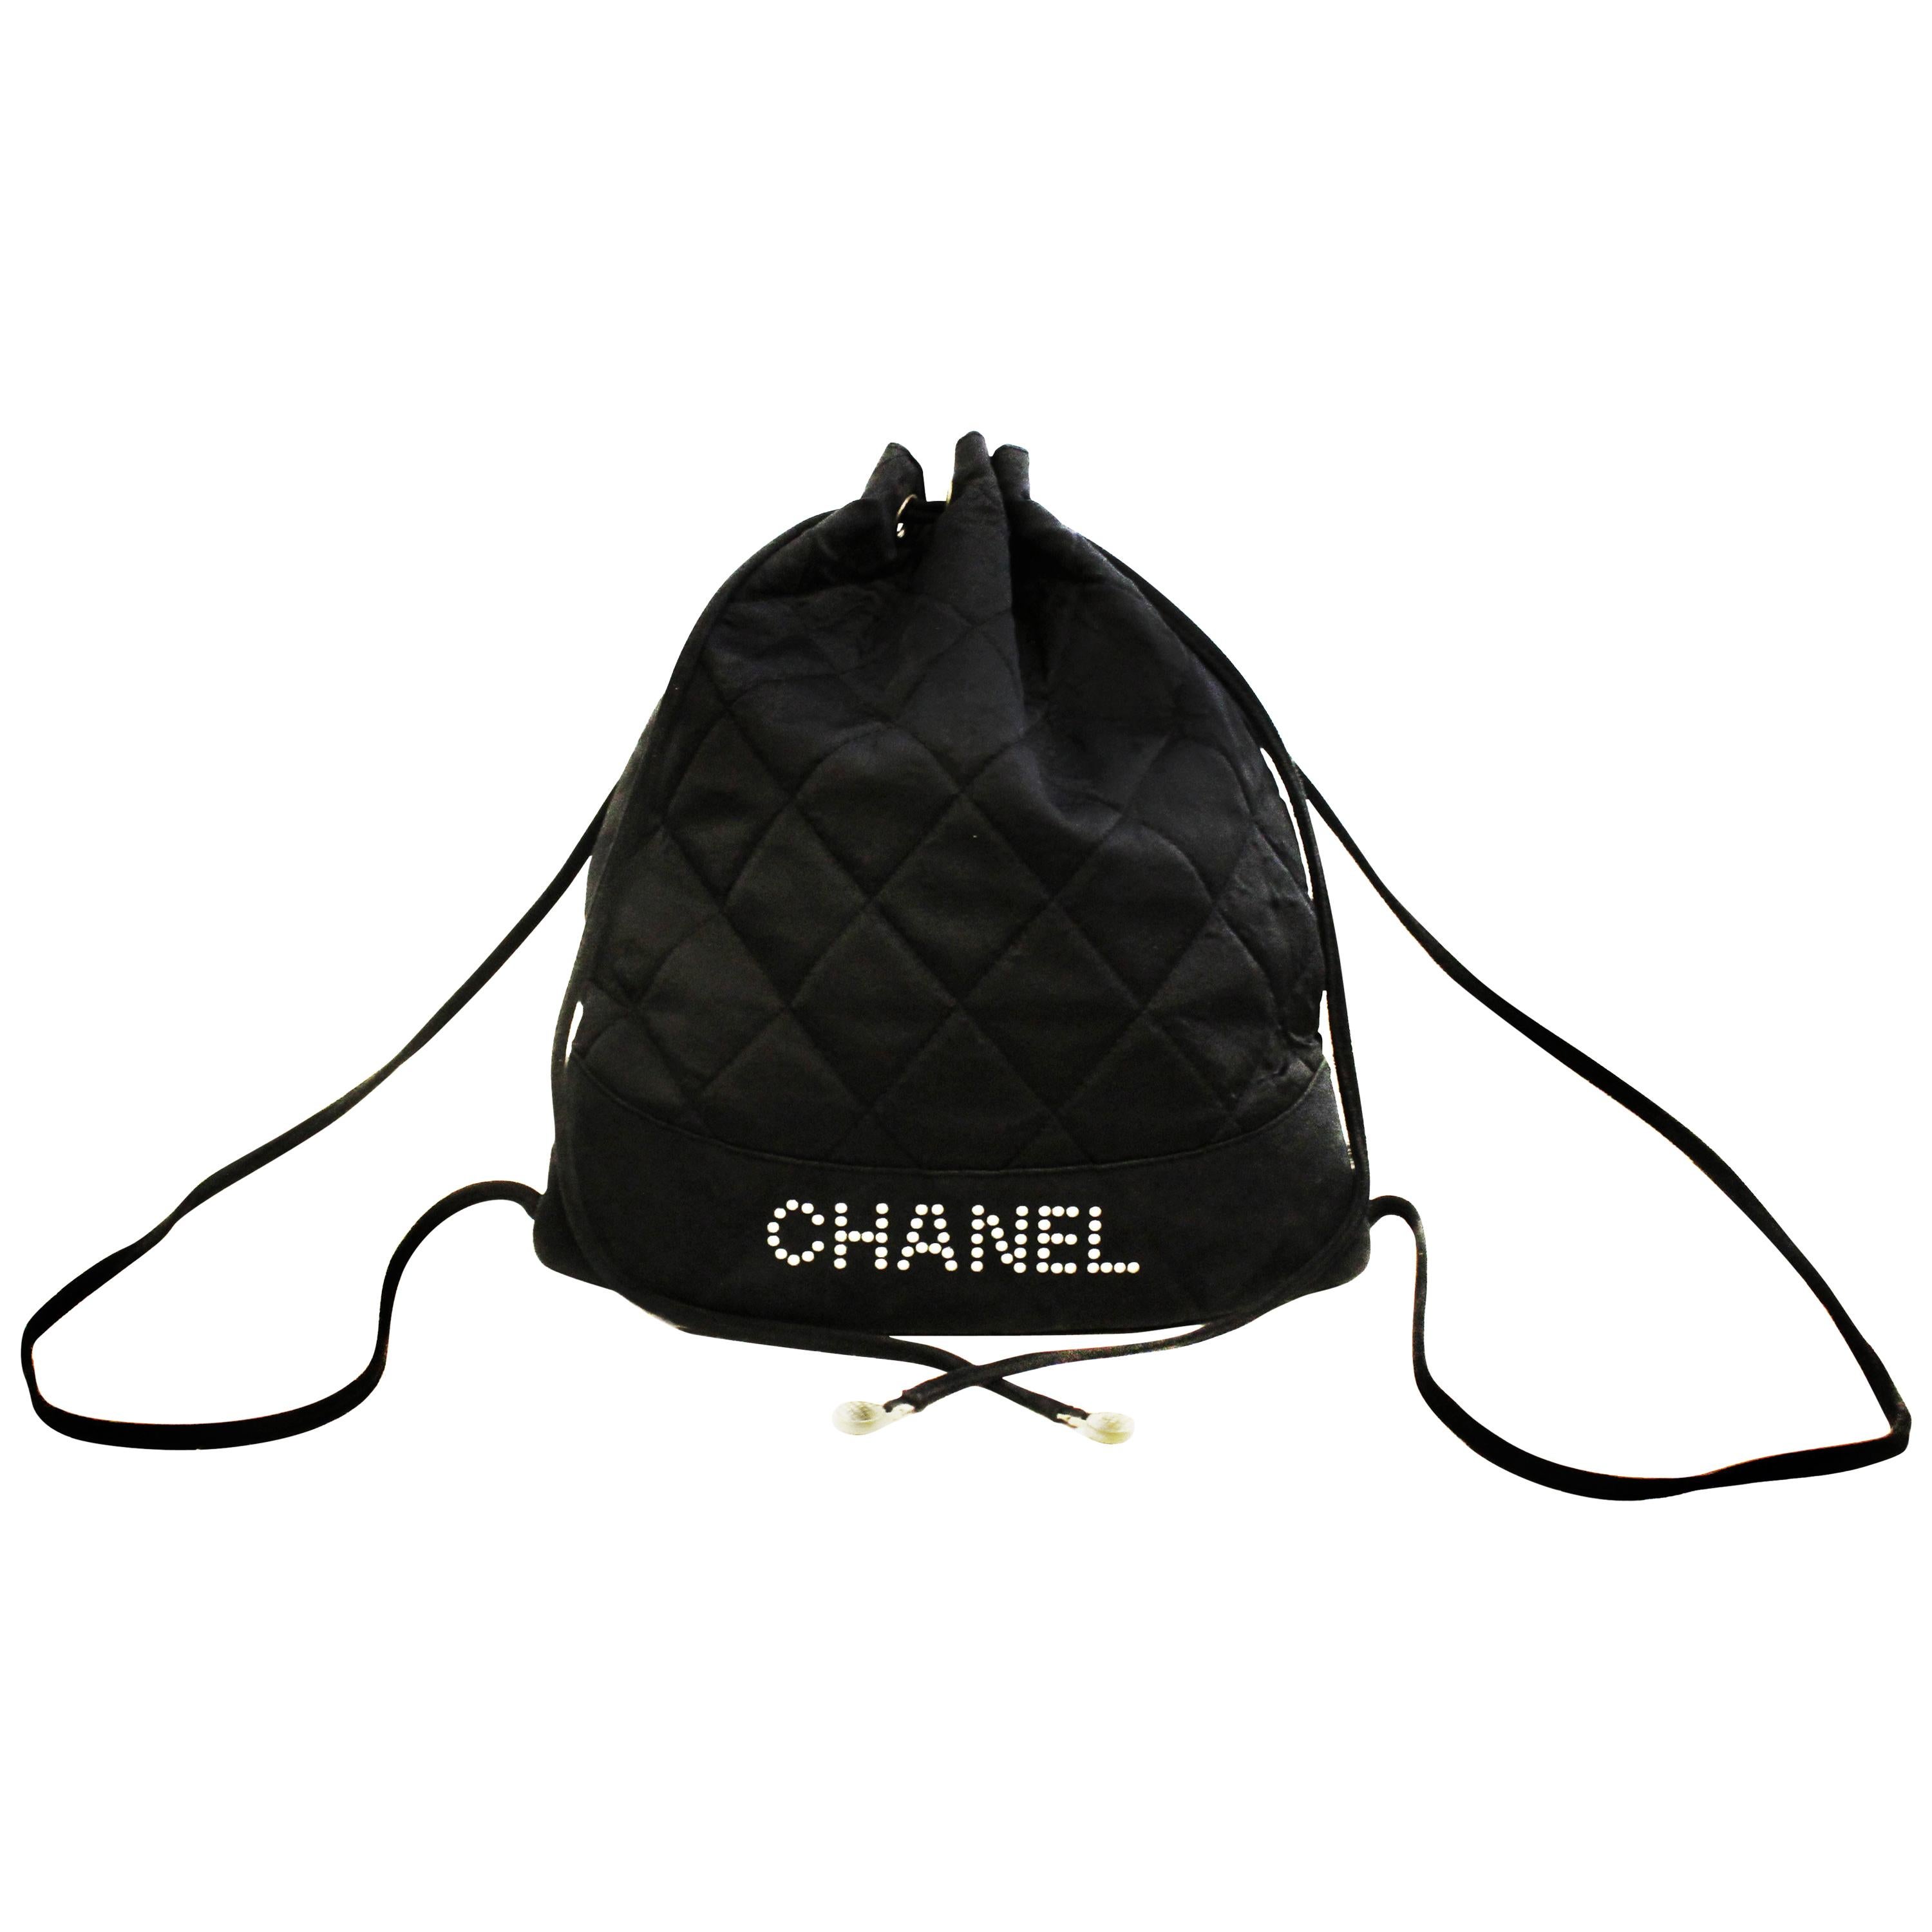 Chanel Black Satin Mini Drawstring Back Pack Bag